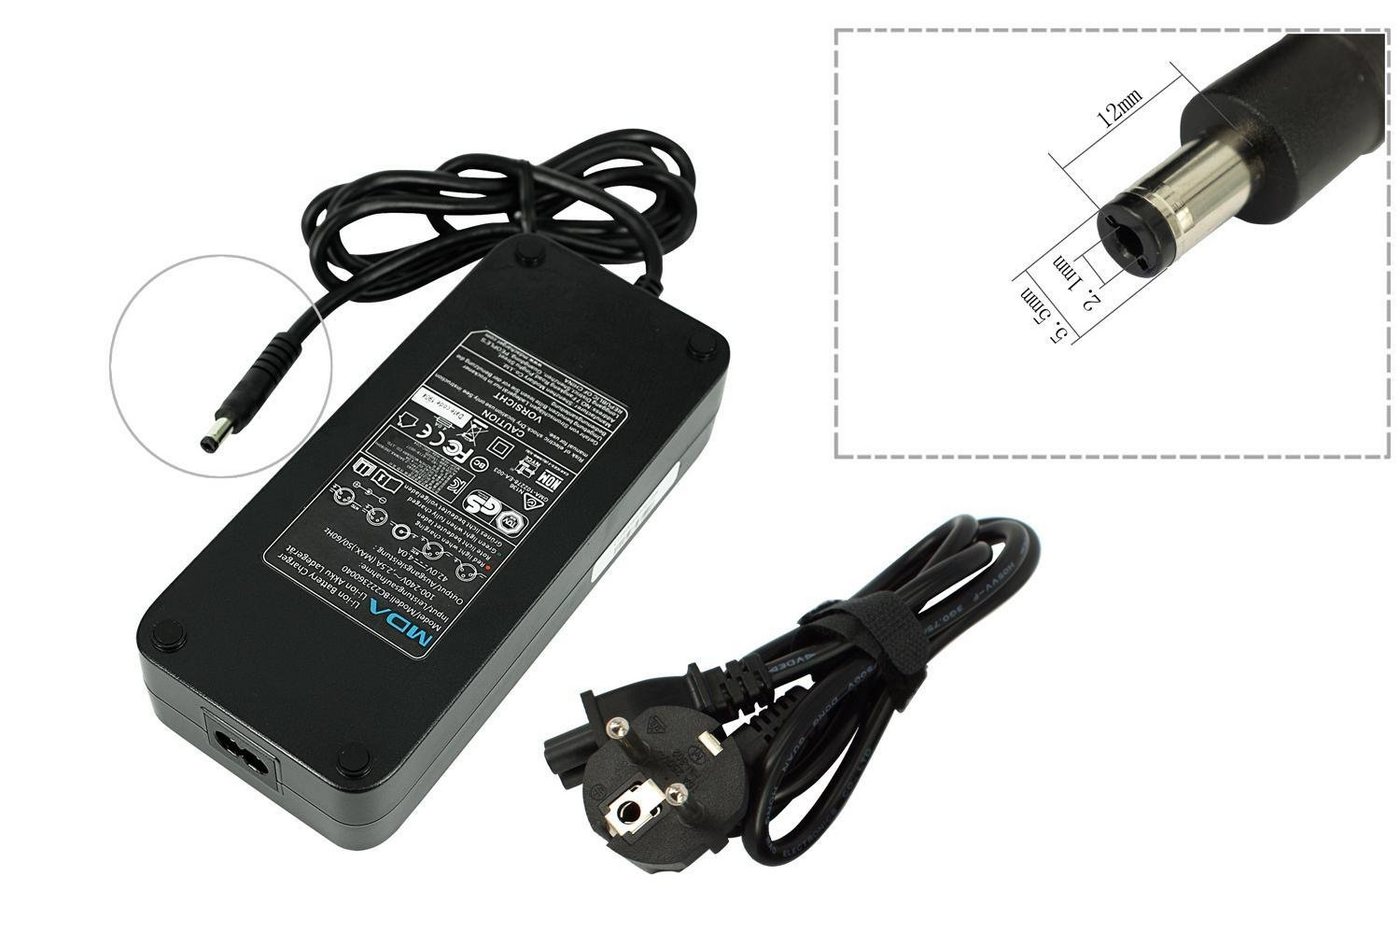 PowerSmart CM160L1004E.001 Batterie-Ladegerät (36V 4A Adapter für Elektrofahrrad, Scooter, Wispeed T850 36V Scooter) von PowerSmart